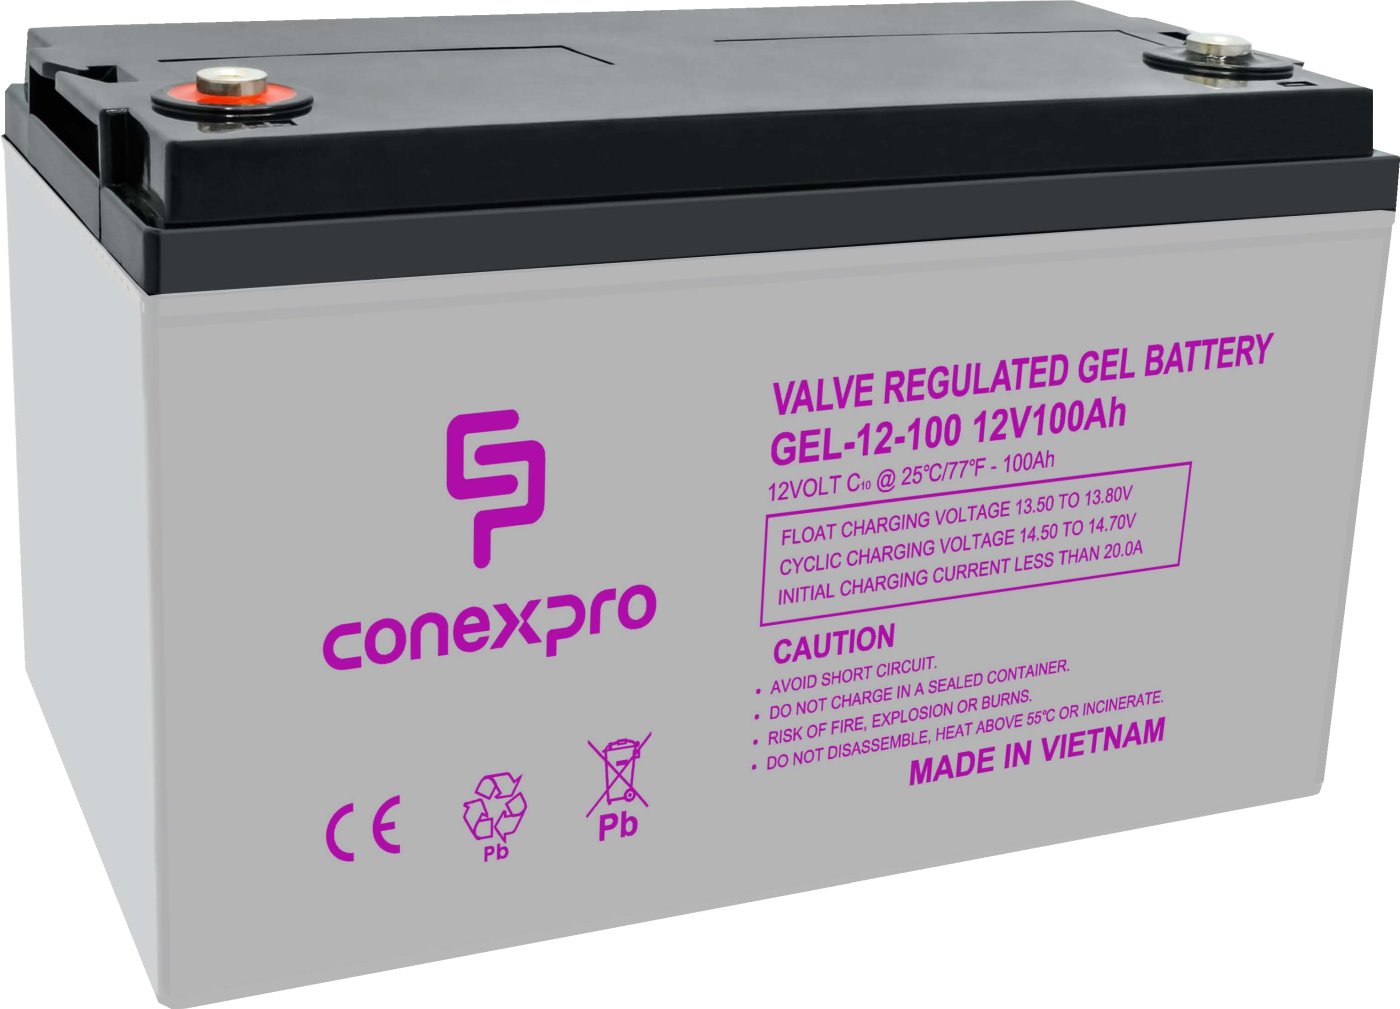 Conexpro baterie gelová, 12V, 100Ah, životnost 10-12 let, M8, Deep cycle